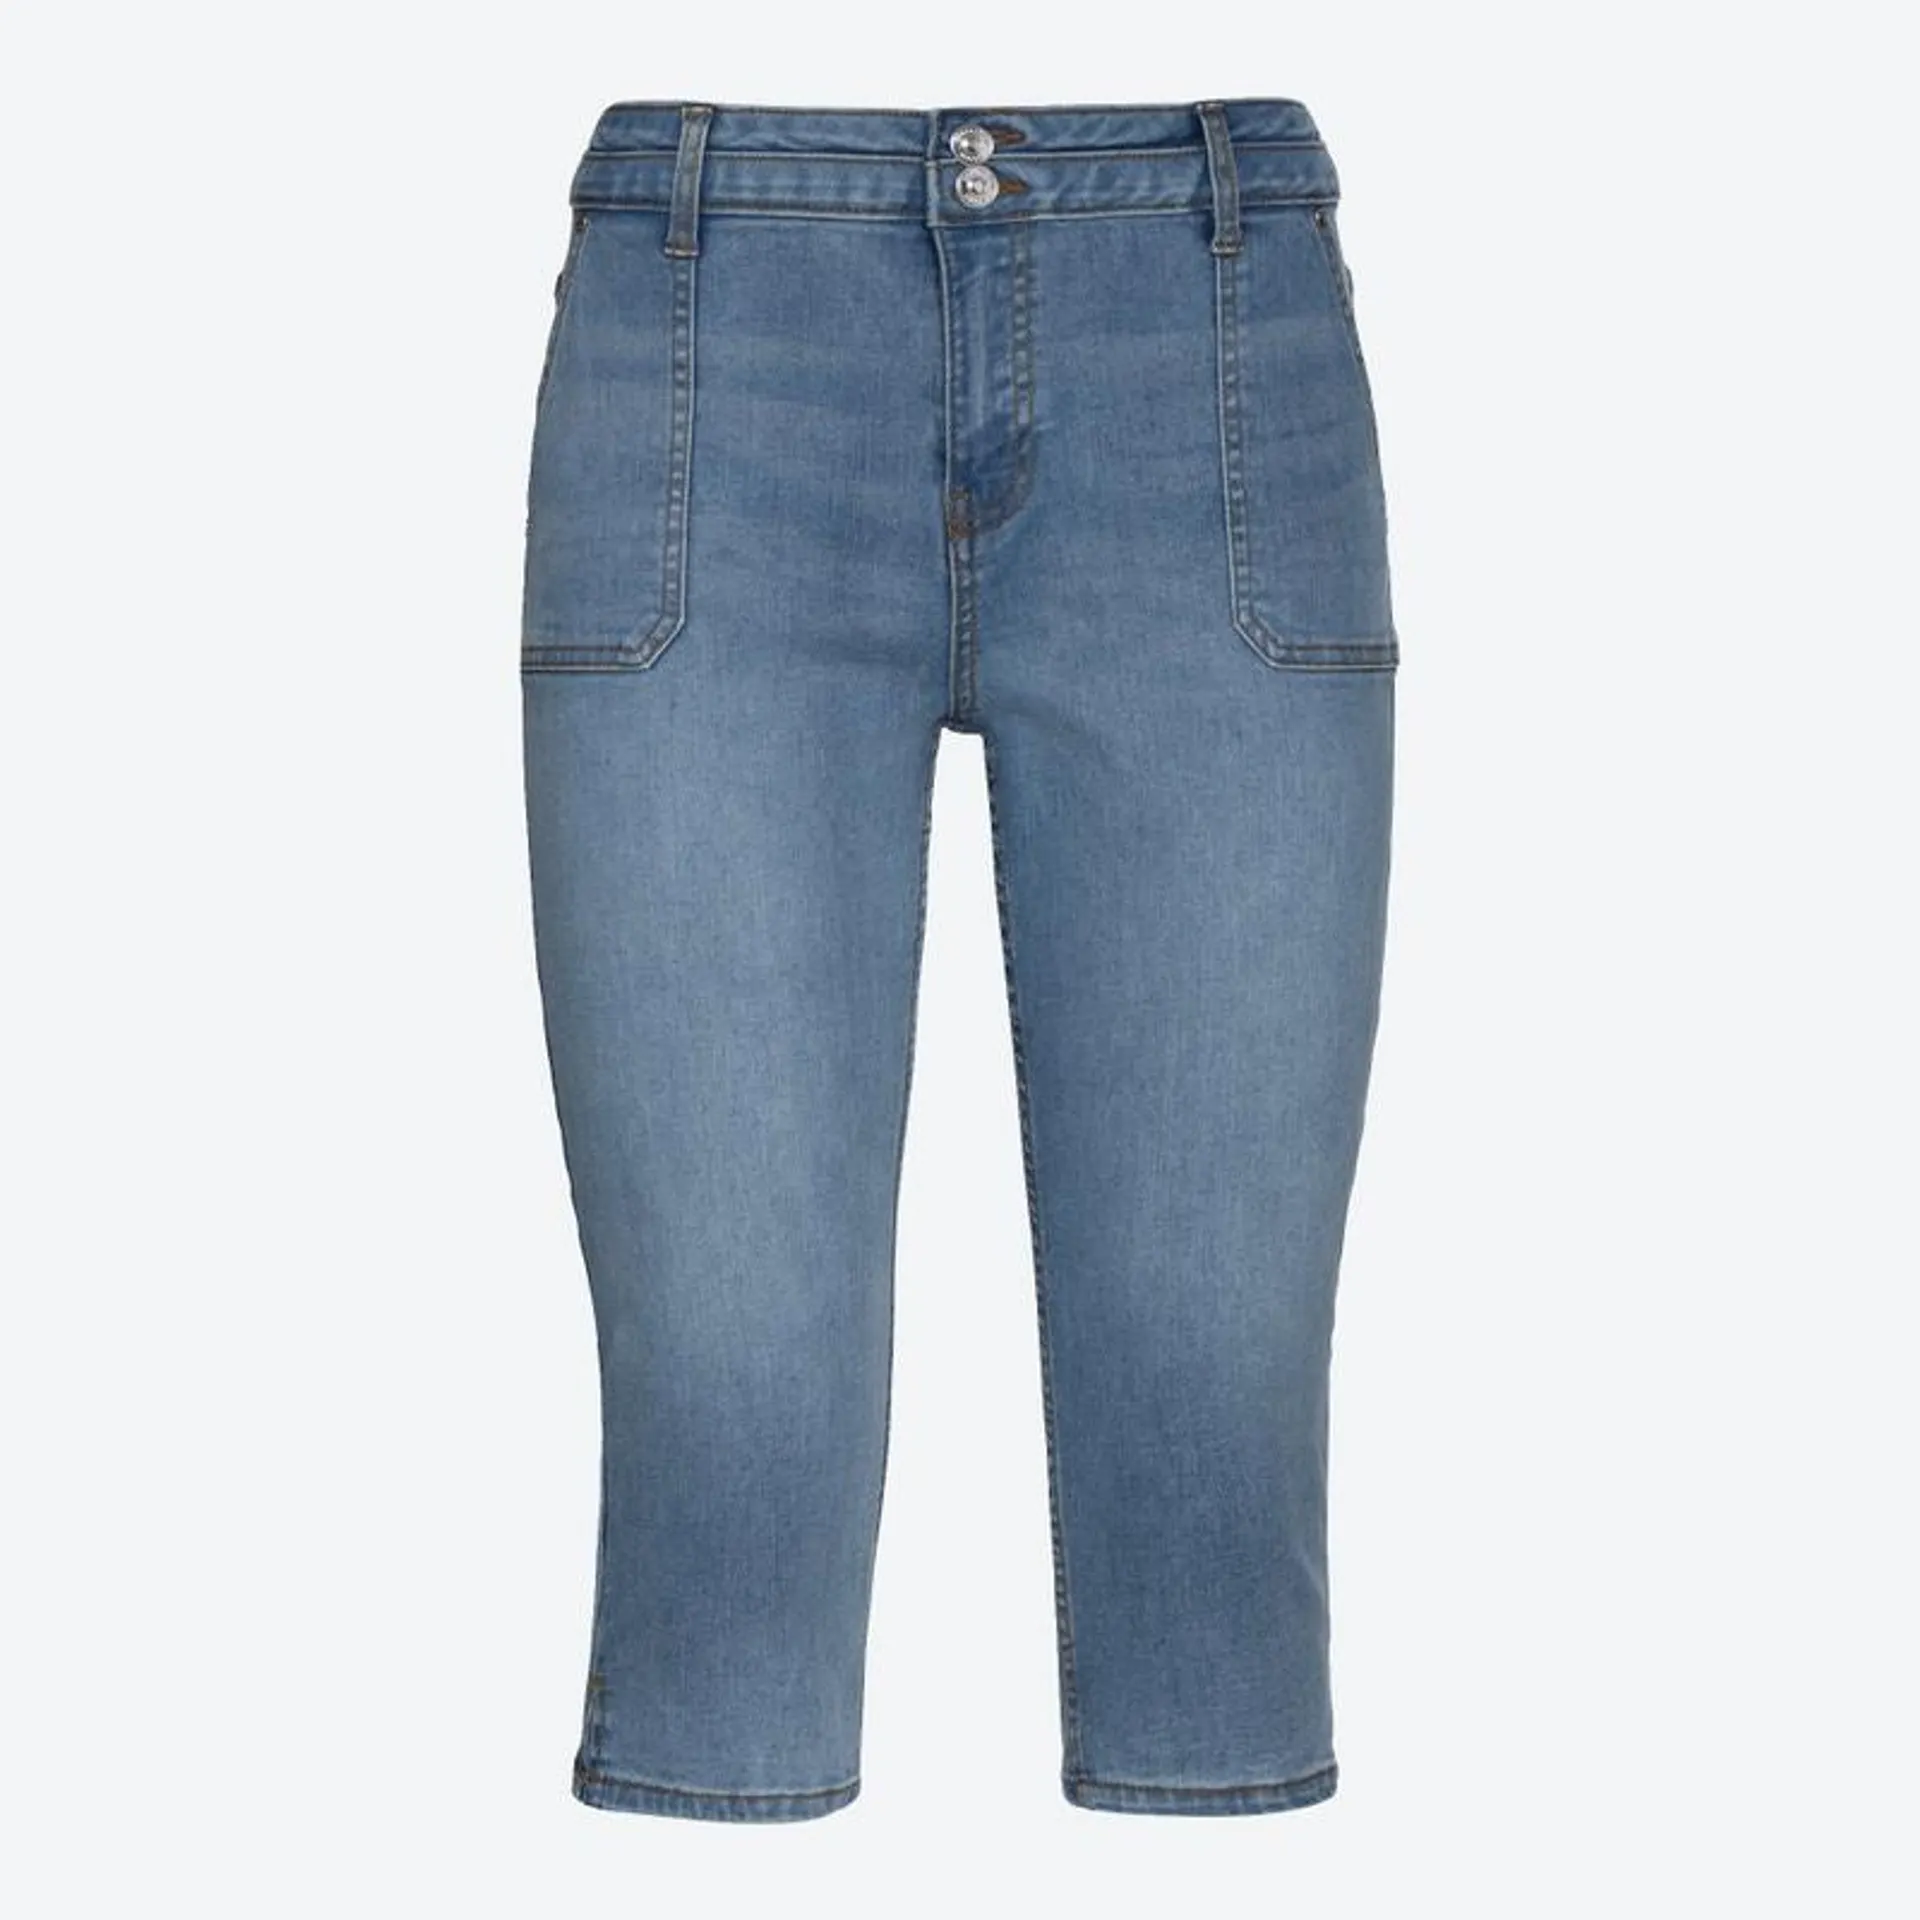 Damen-Capri-Jeans mit Knöpfen